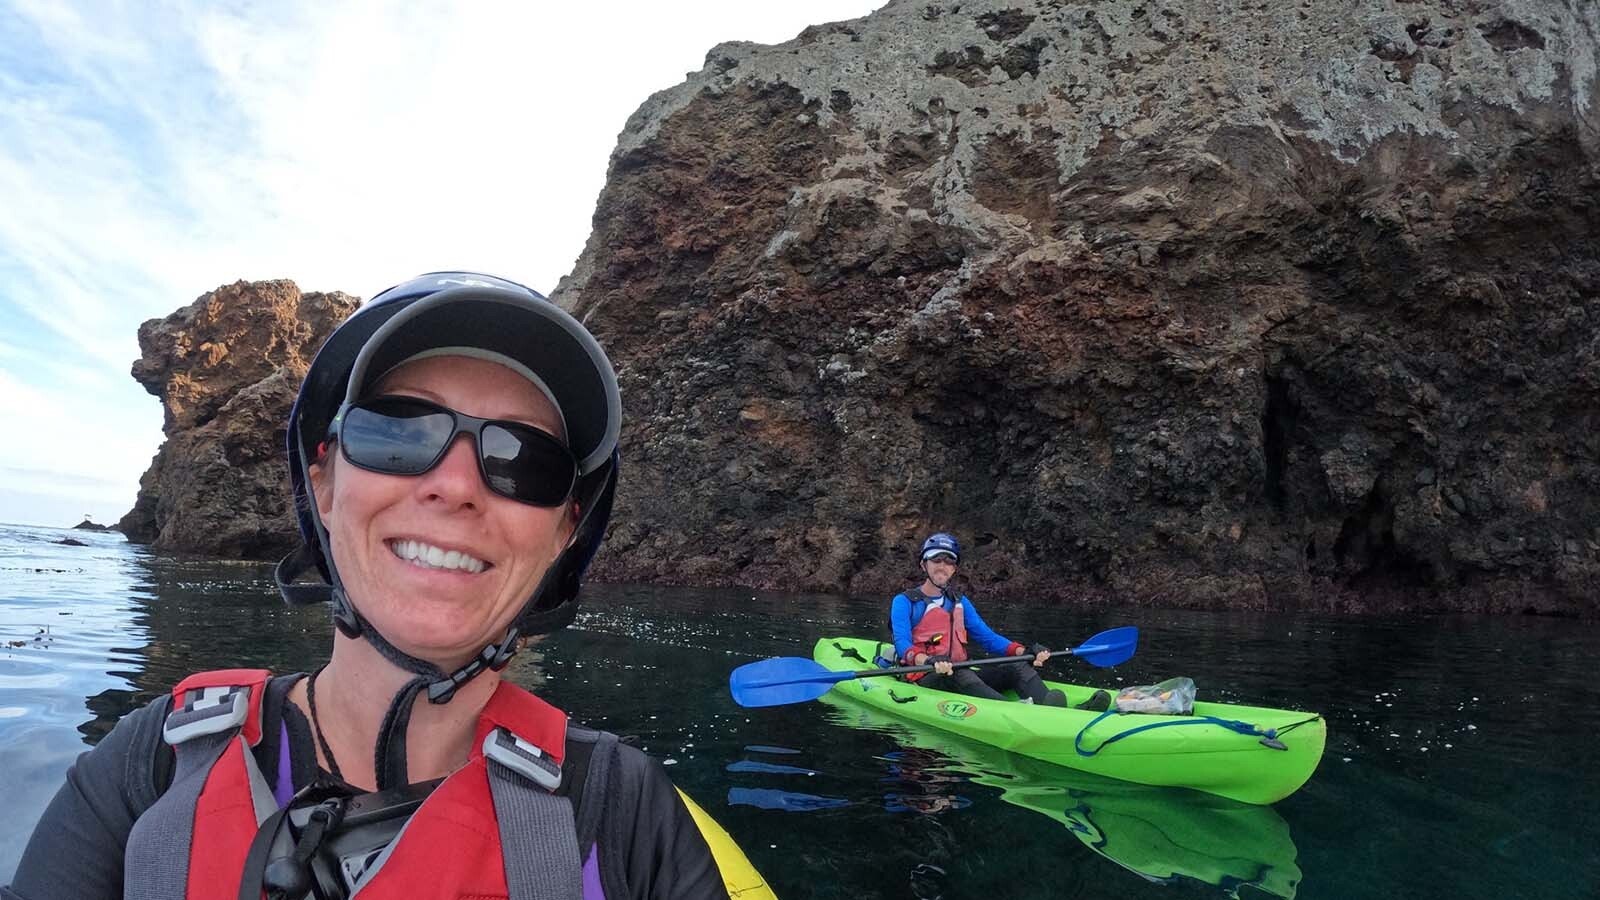 Tiffany and Scott Sink kayaking at Santa Cruz Island in Channel Islands National Park ,California, in November 2021.